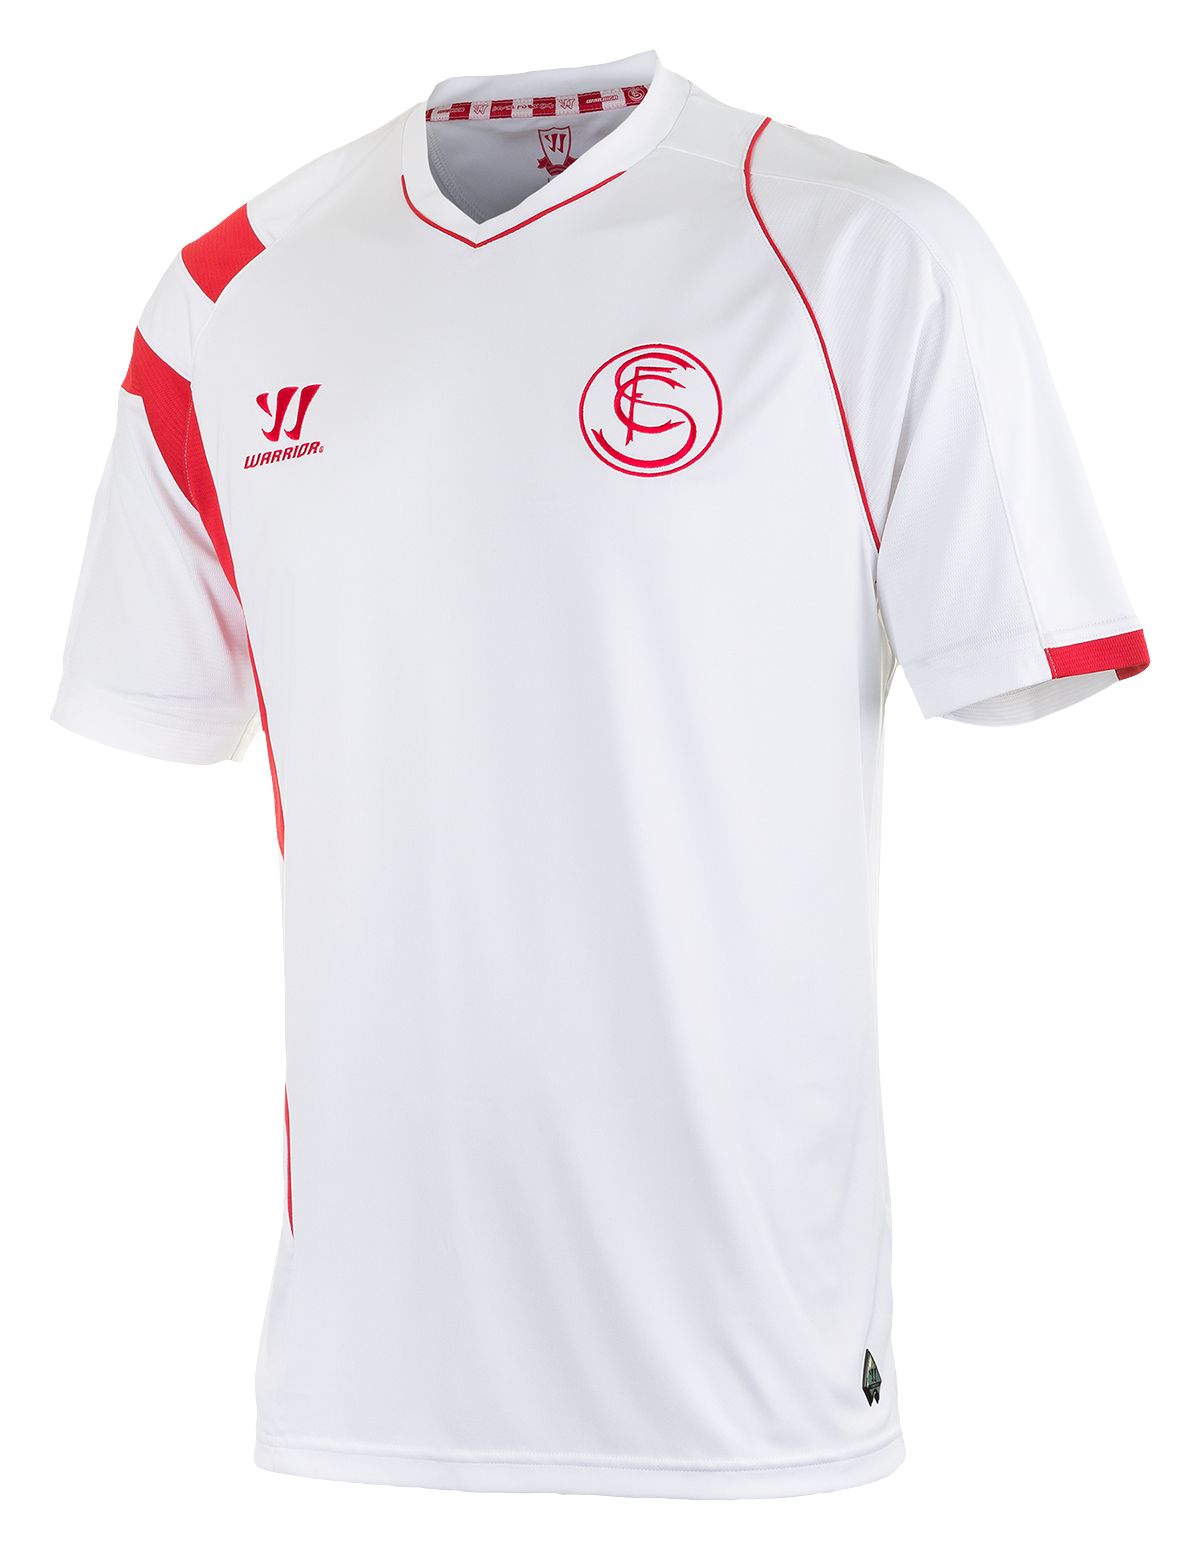 Sevilla Home Short Sleeve Jersey 2014/15, White image number 1